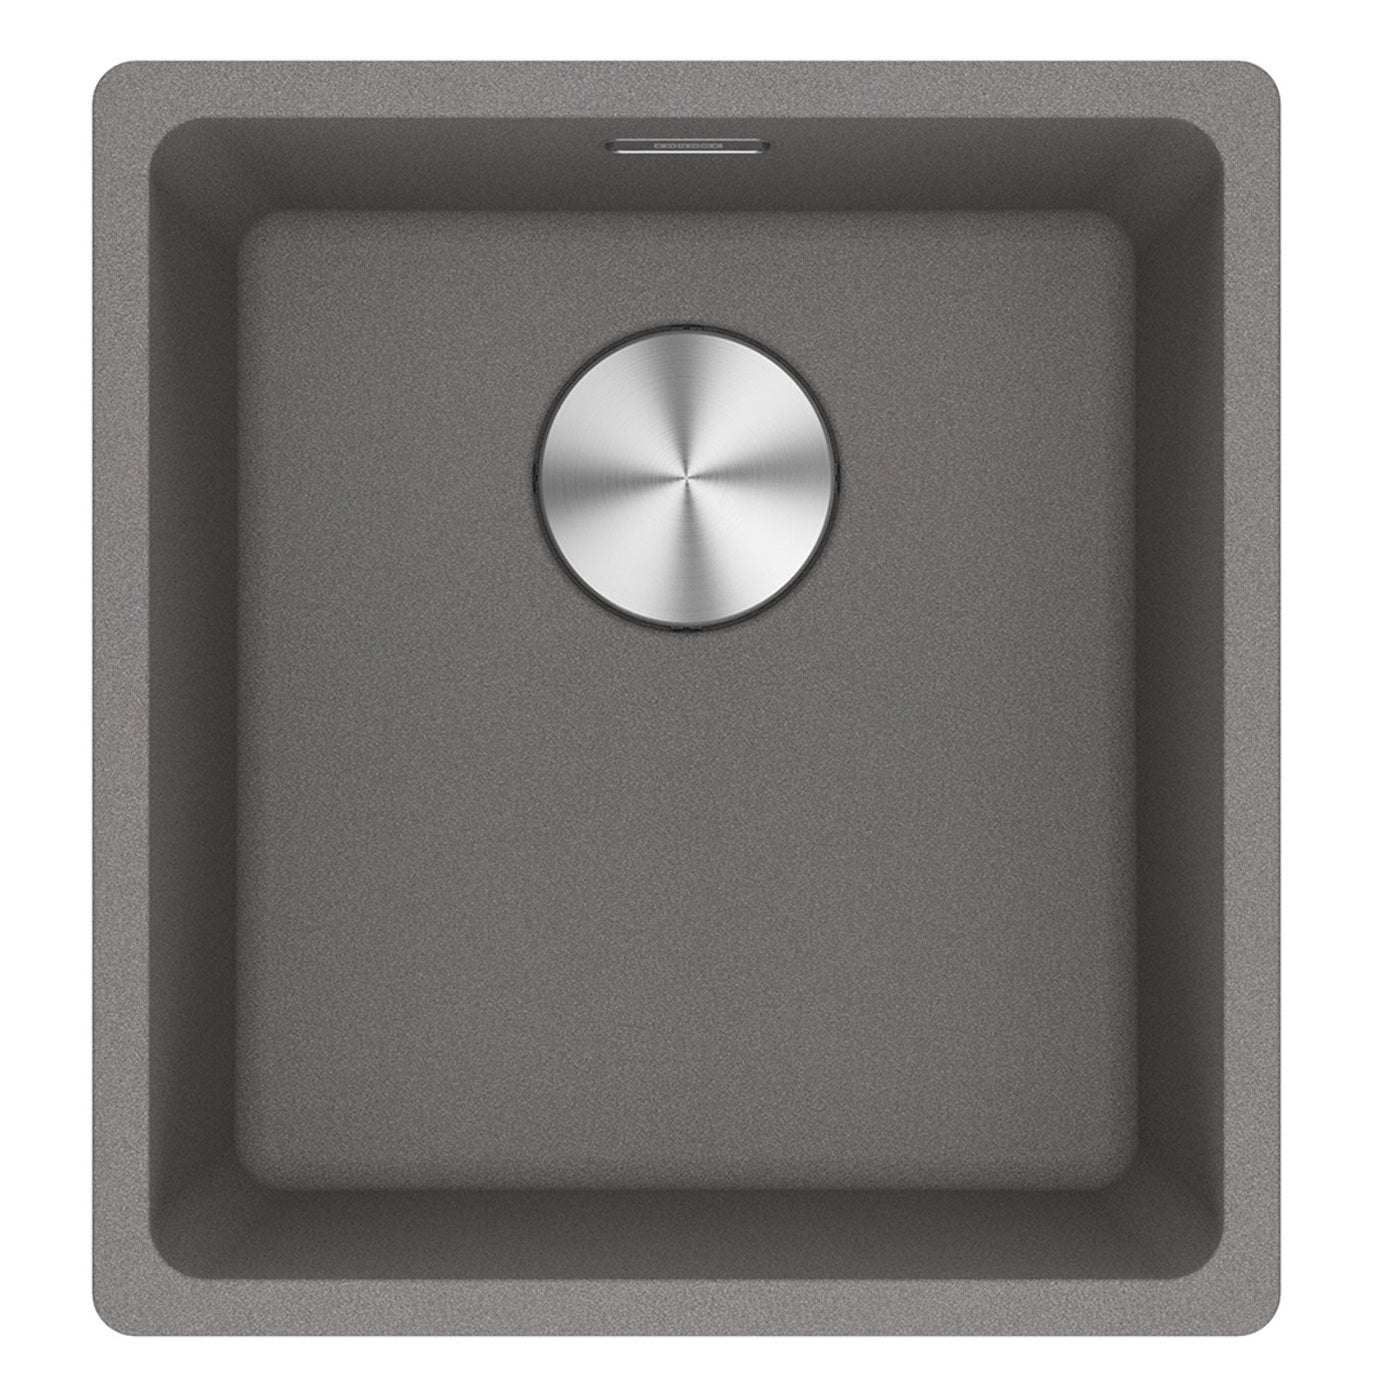 Franke Maris Single Bowl Granite Sink - MRG110-37 - Stone Grey